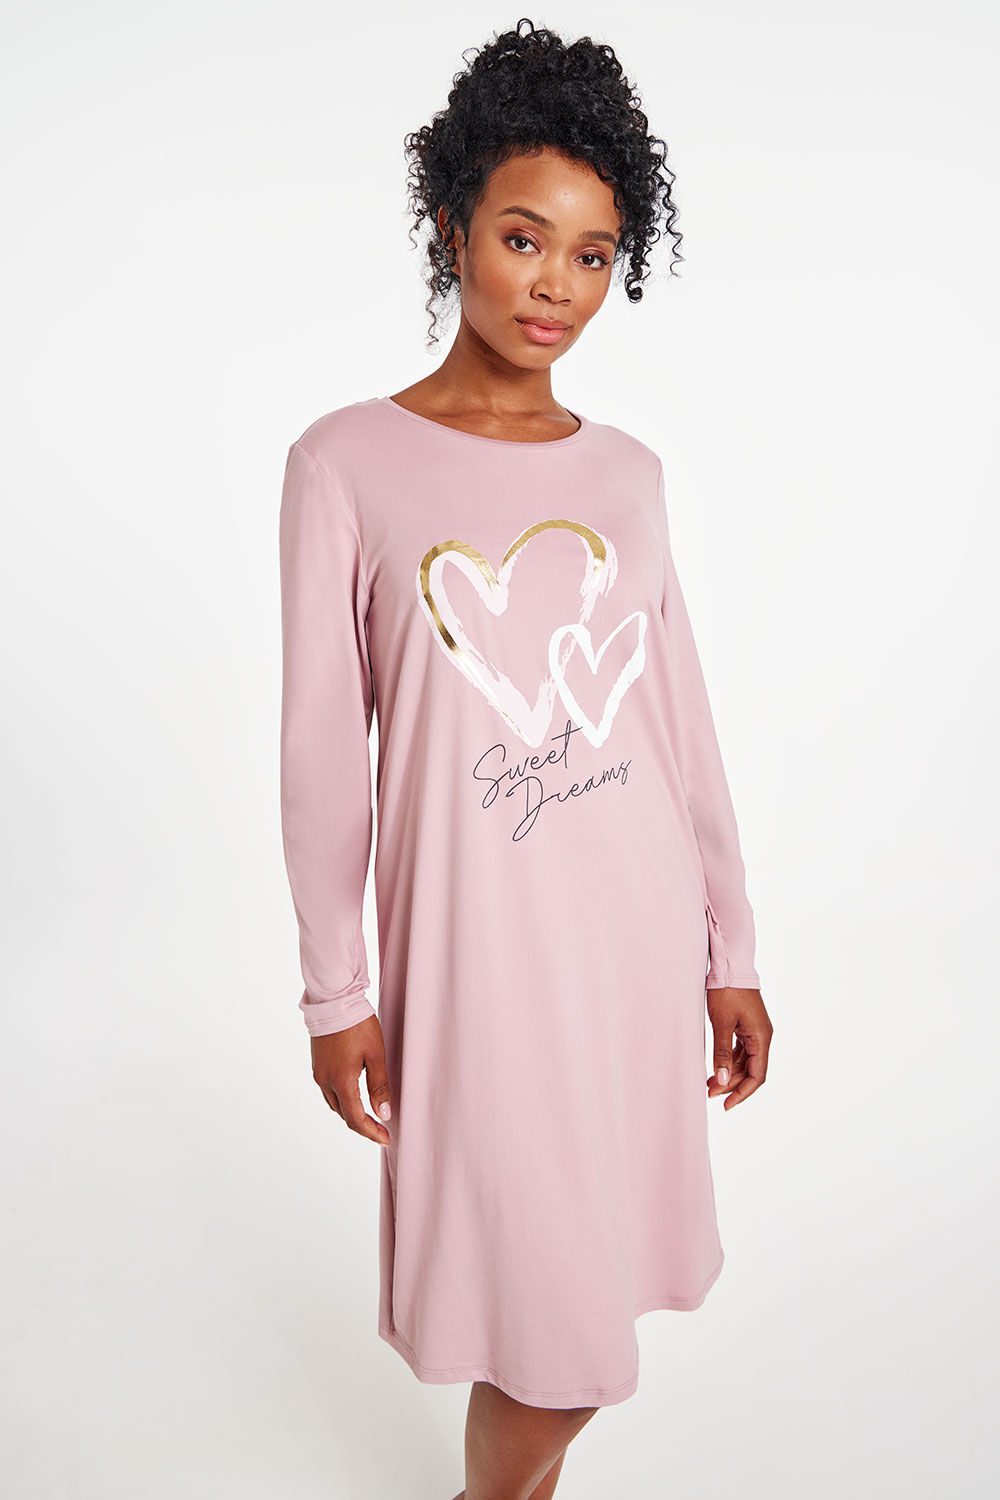 Bonmarche Women’s Pink Heart Print Long Sleeve Soft Touch Nightdress, Size: 16-18